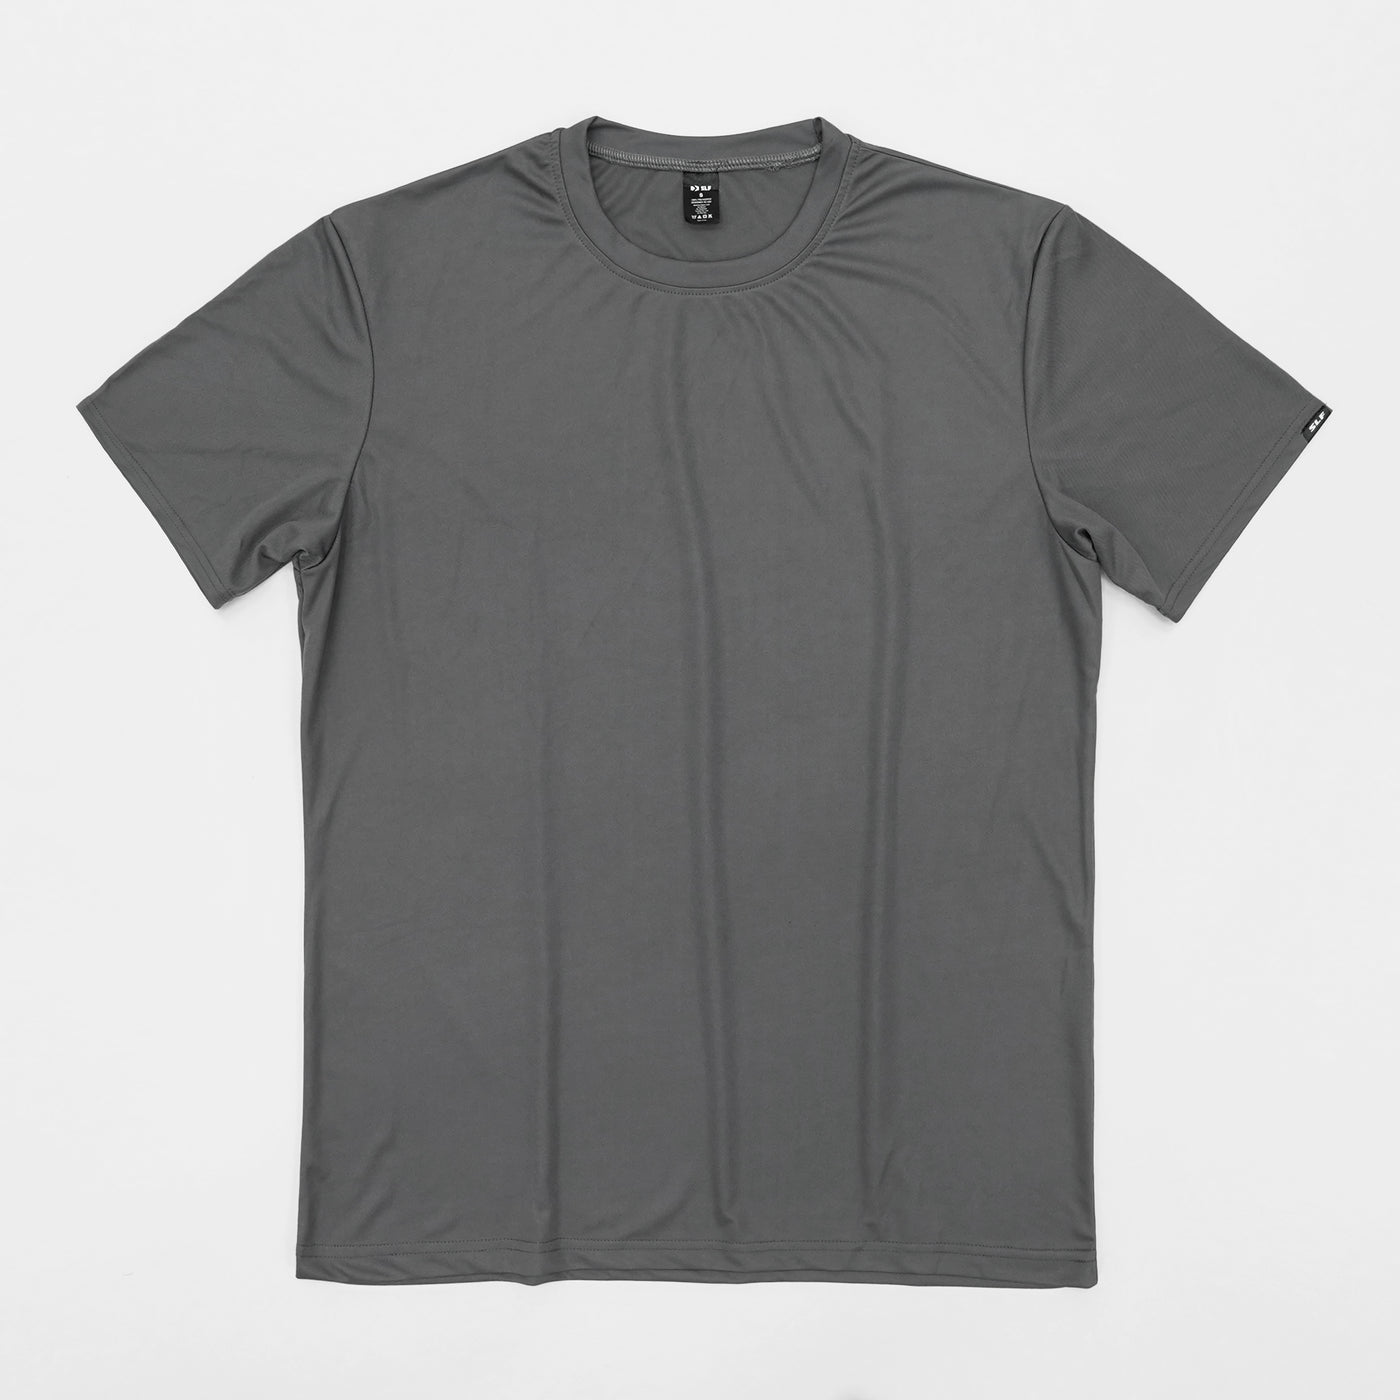 Hue Dark Gray Quick Dry Shirt - Big